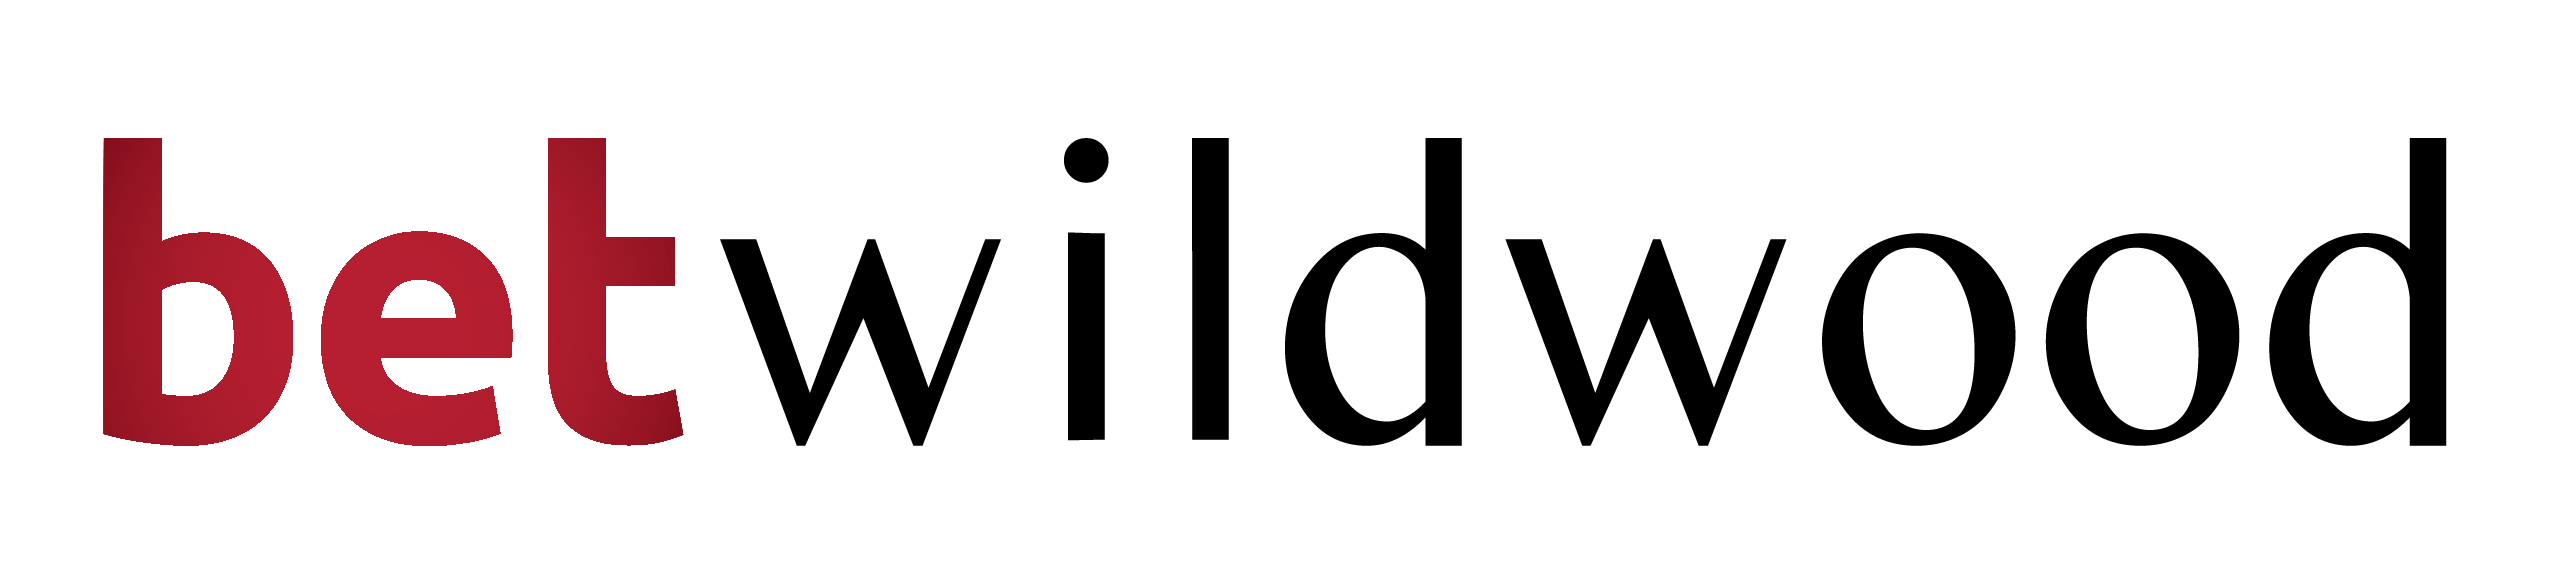 BetWildWood logo